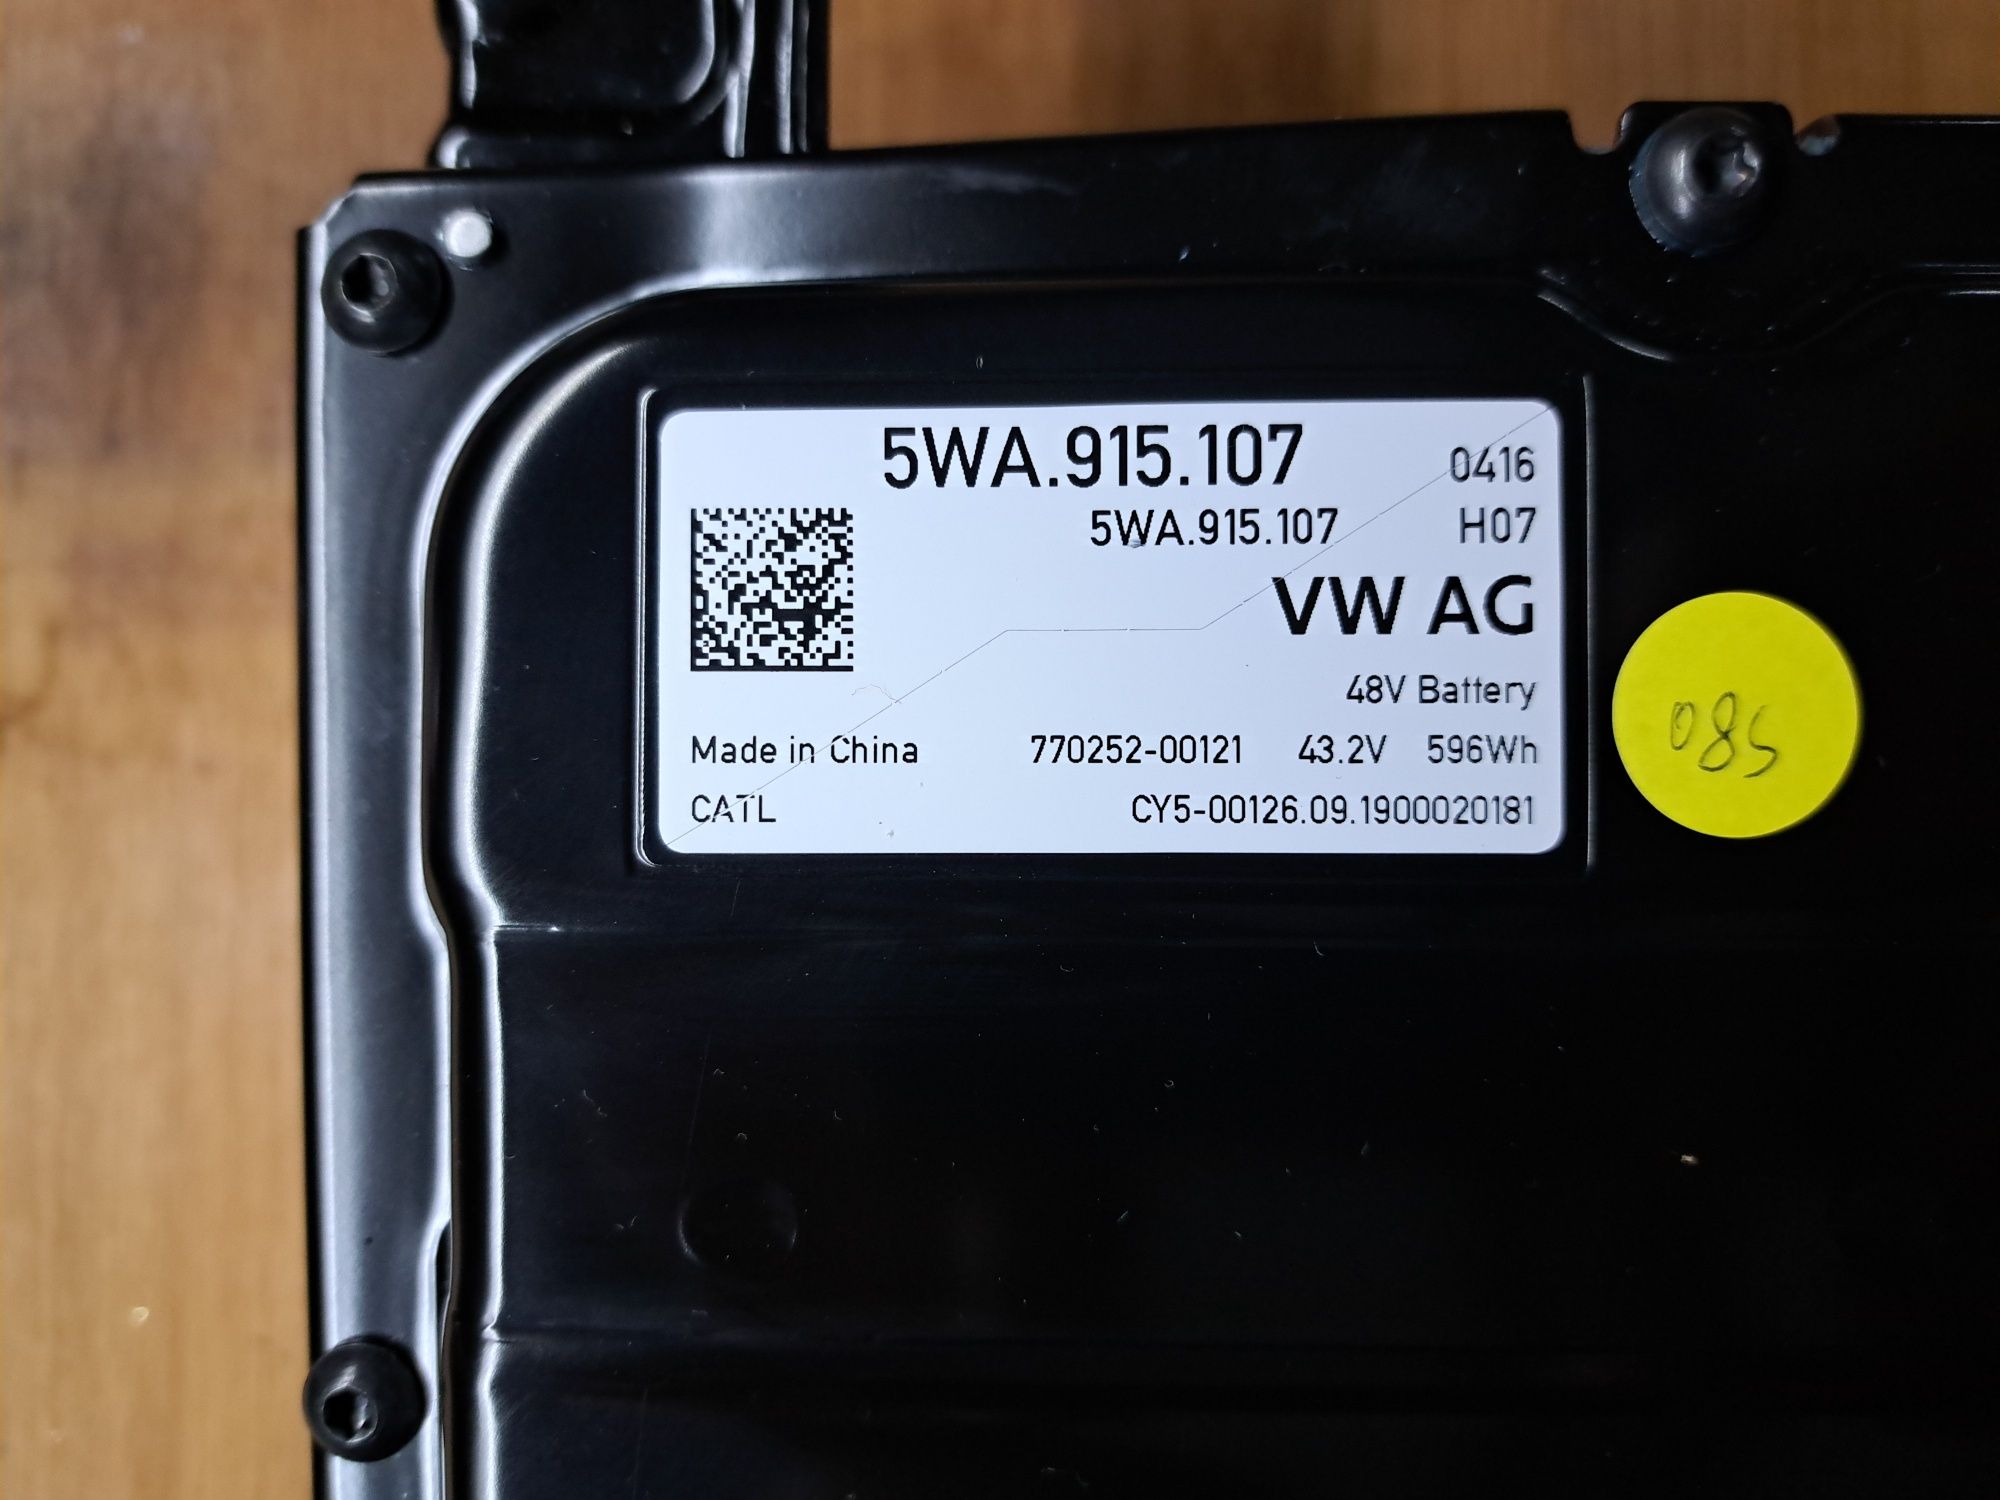 Bateria VW híbrido 5WA.915.107